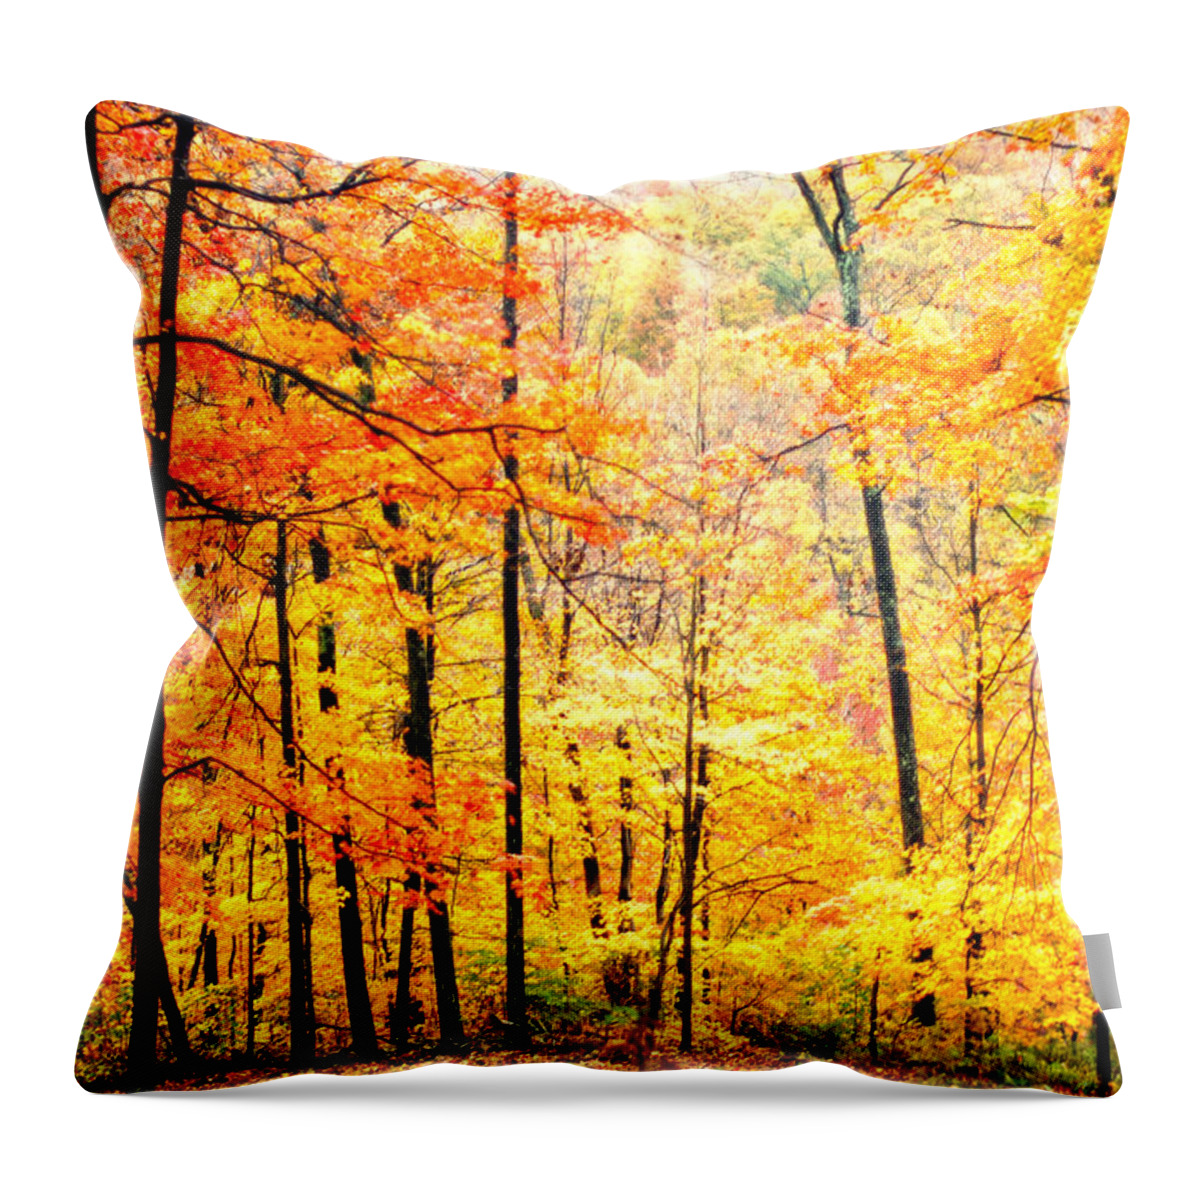 Autumn Throw Pillow featuring the photograph Autumn Forest by Randall Branham